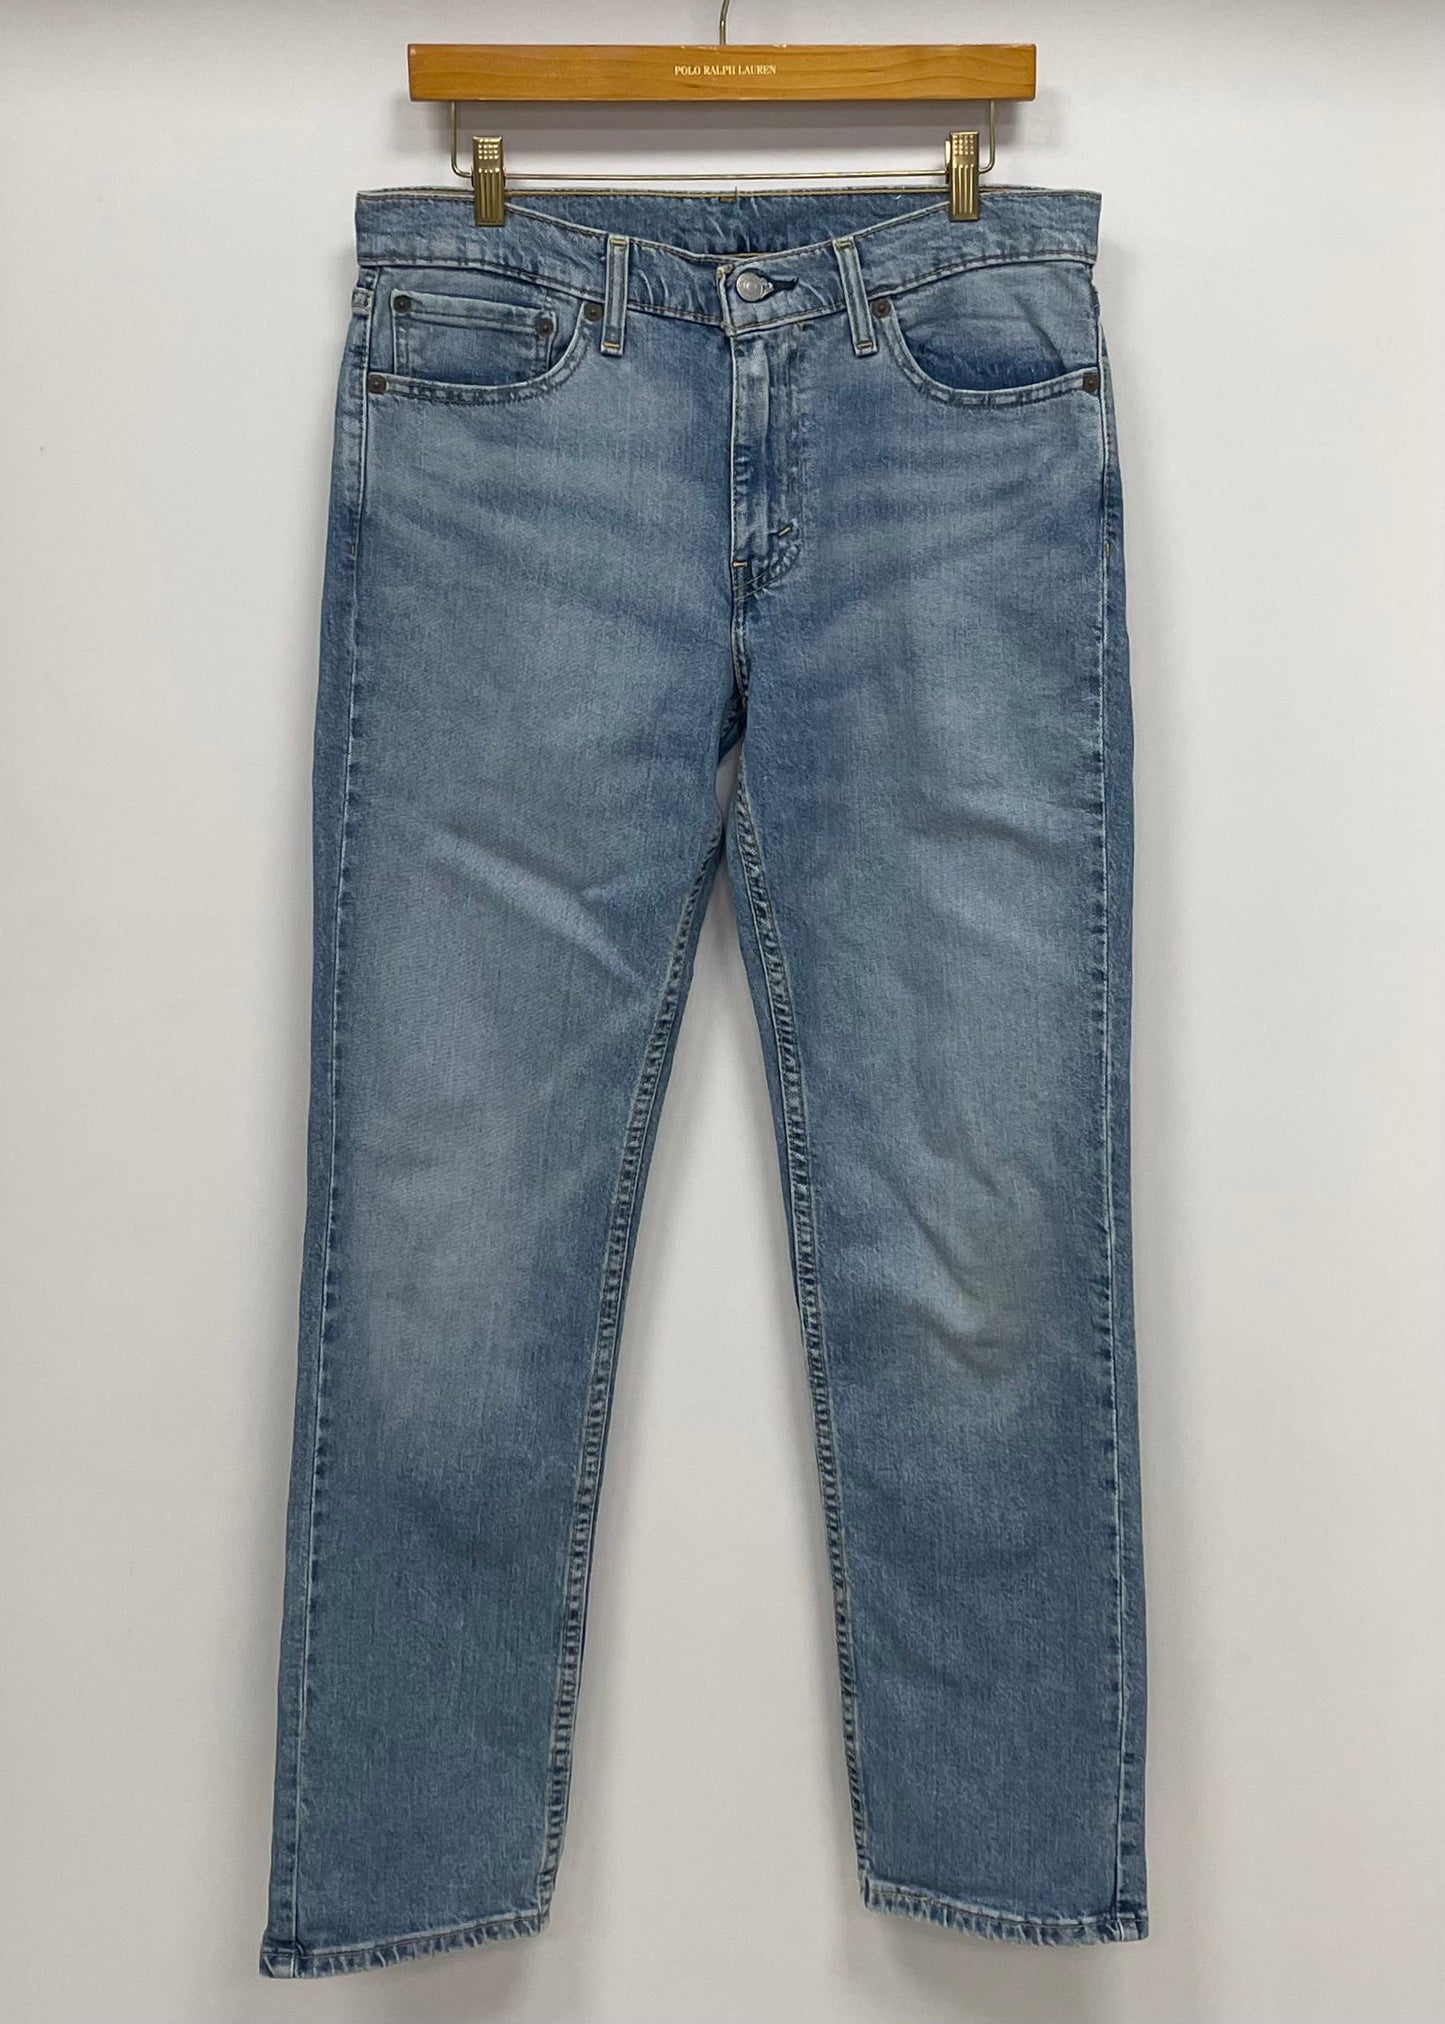 Pantalón jeans color azul claro Levis Strauss Talla 32x30 Corte Slim Fit Stretch